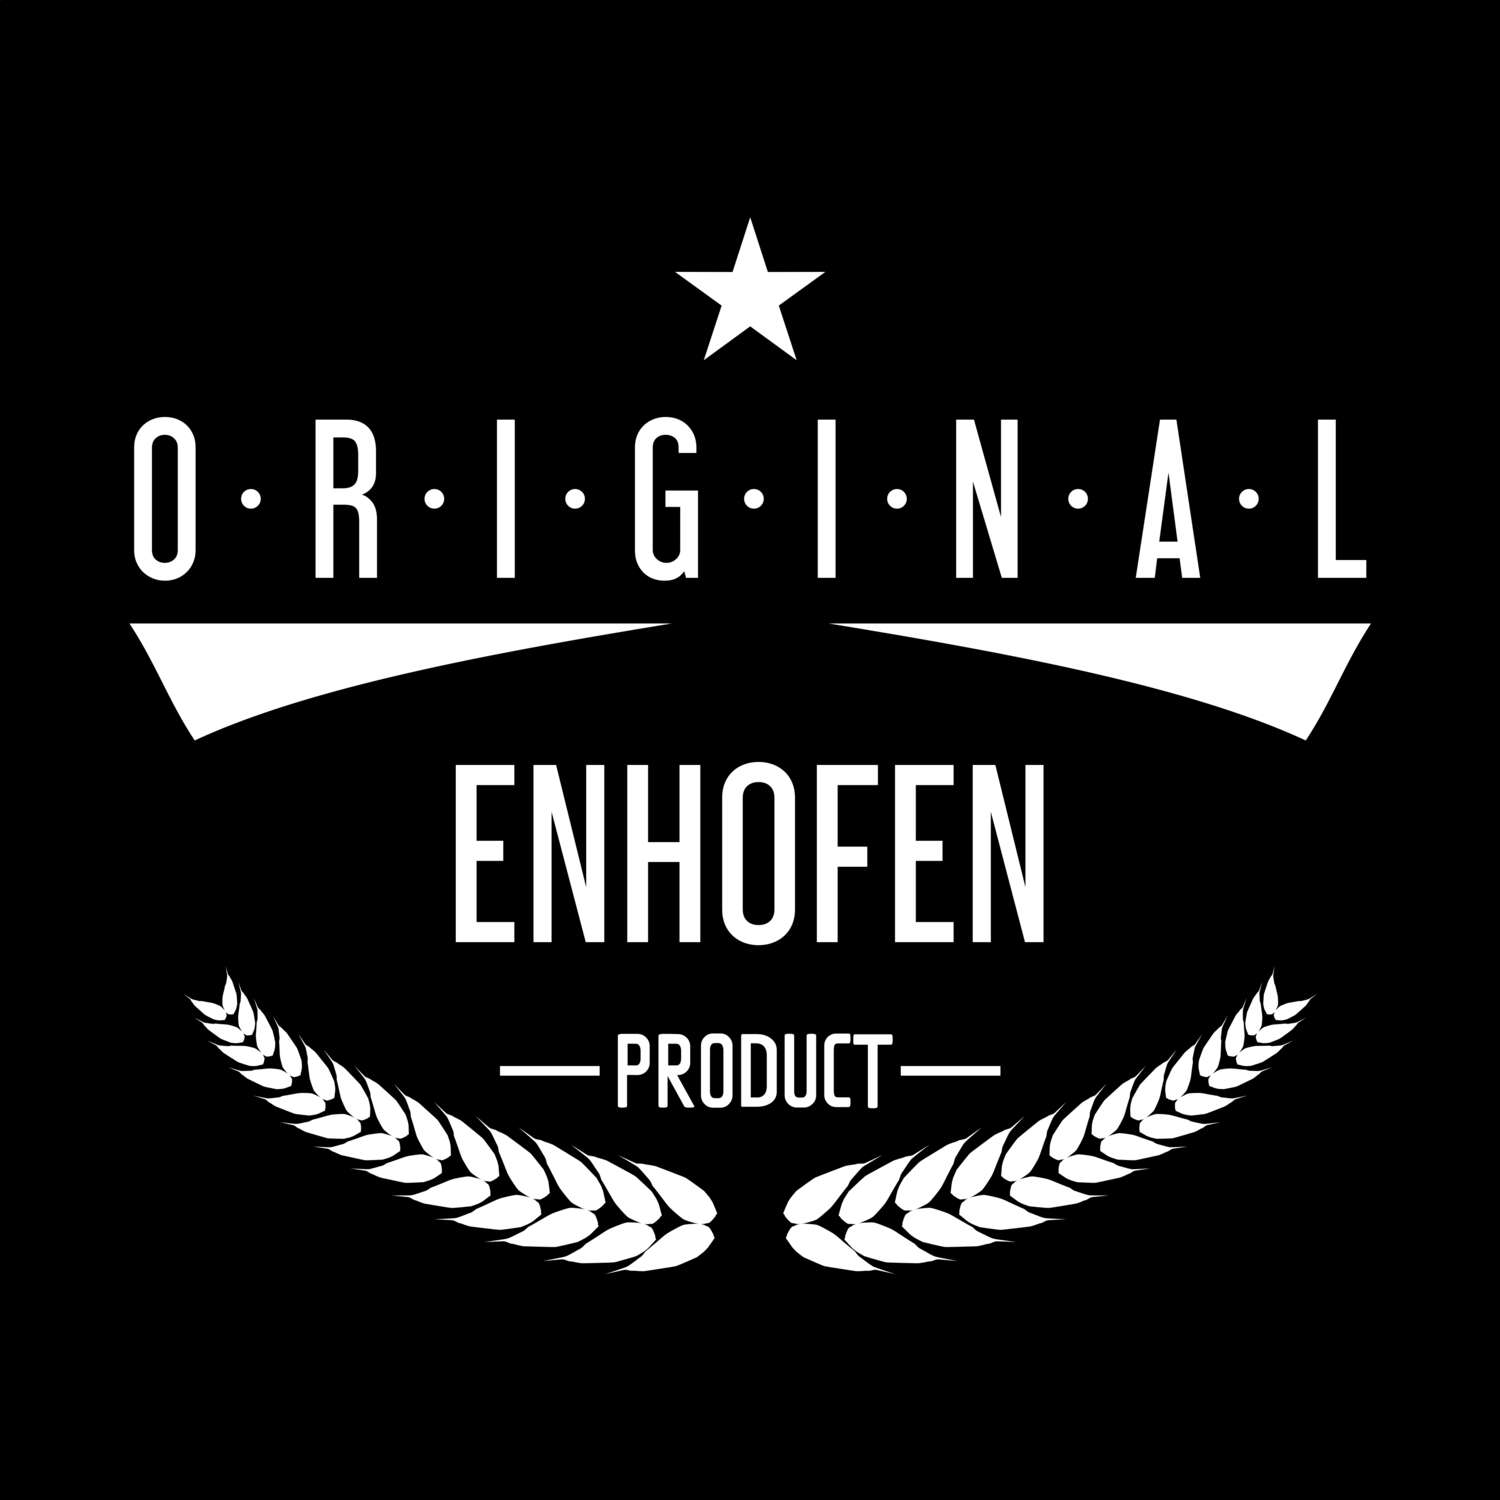 Enhofen T-Shirt »Original Product«